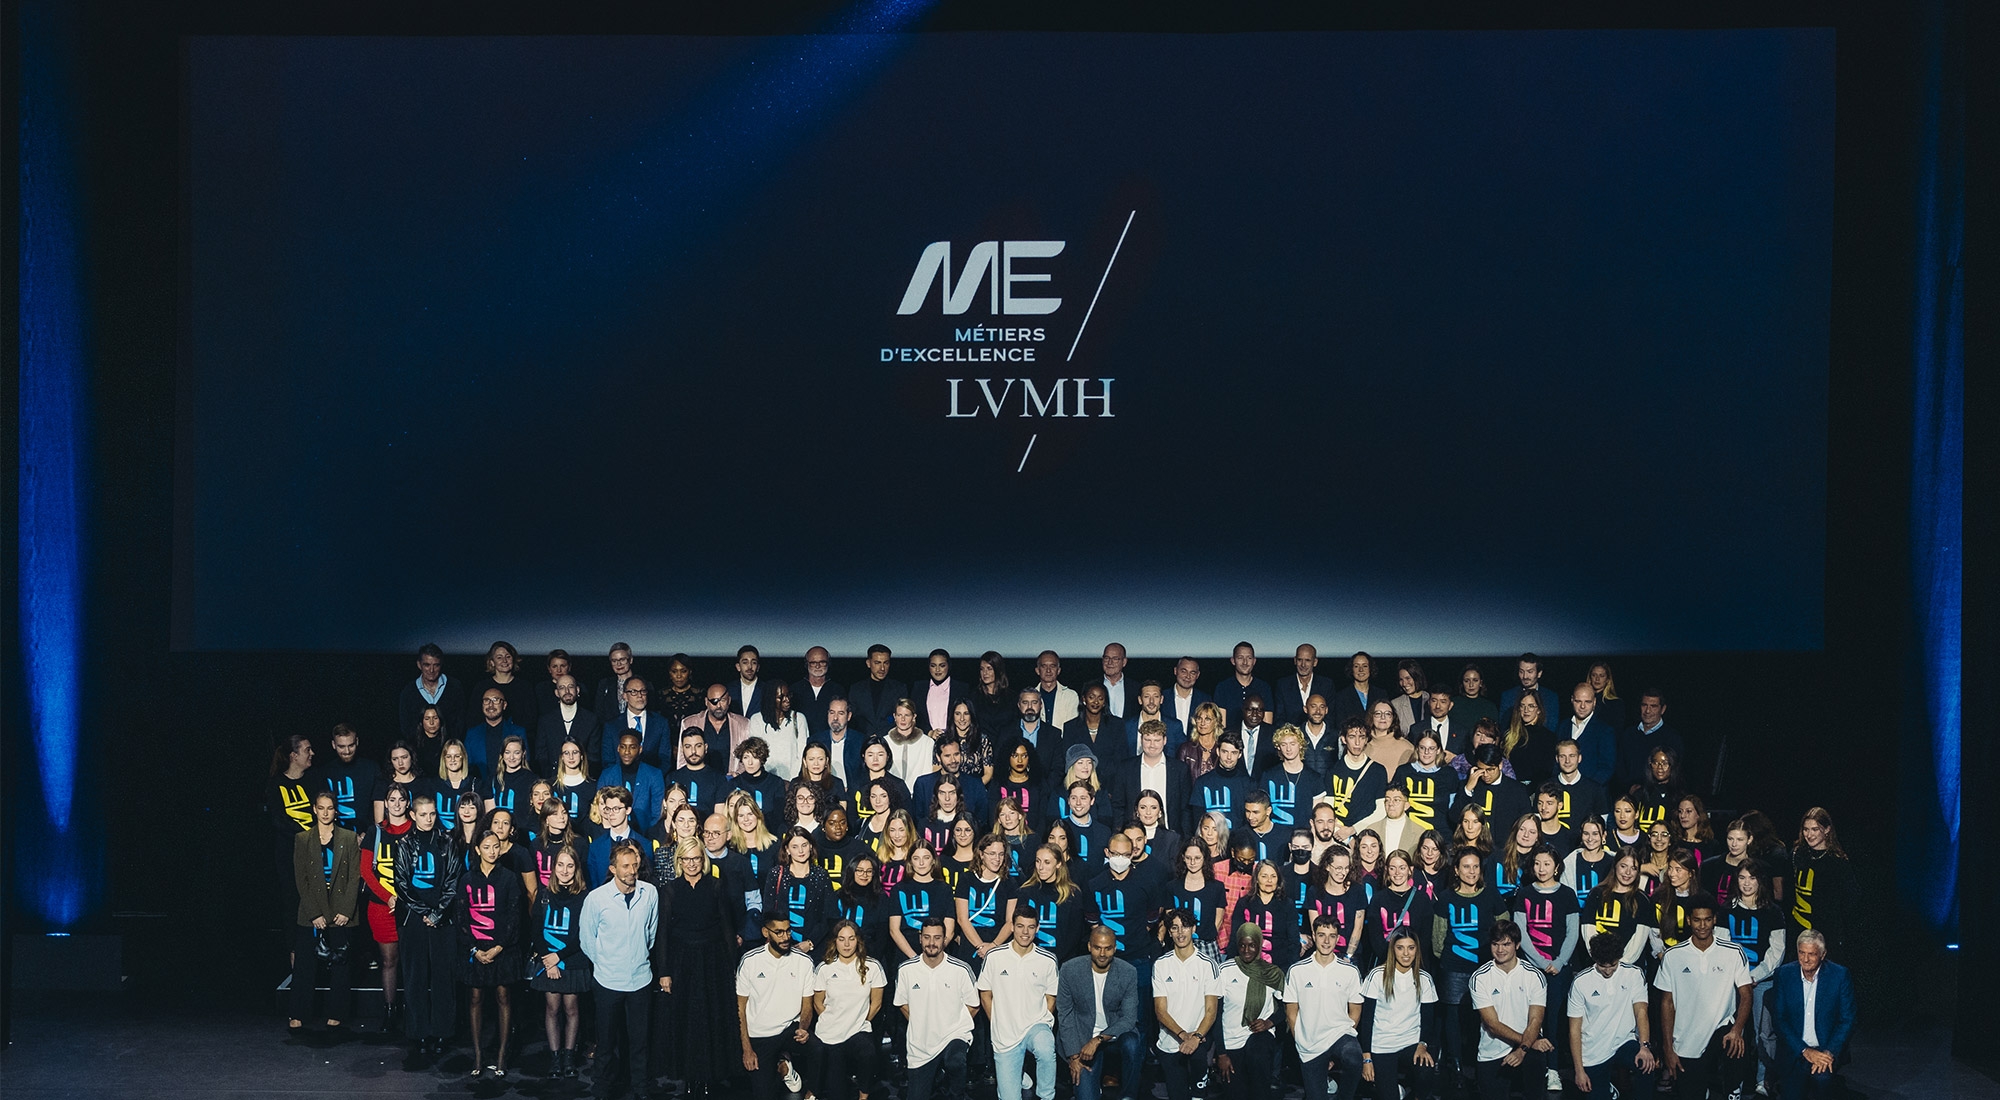 LVMH presents Craft the future, its employer brand signature - LVMH